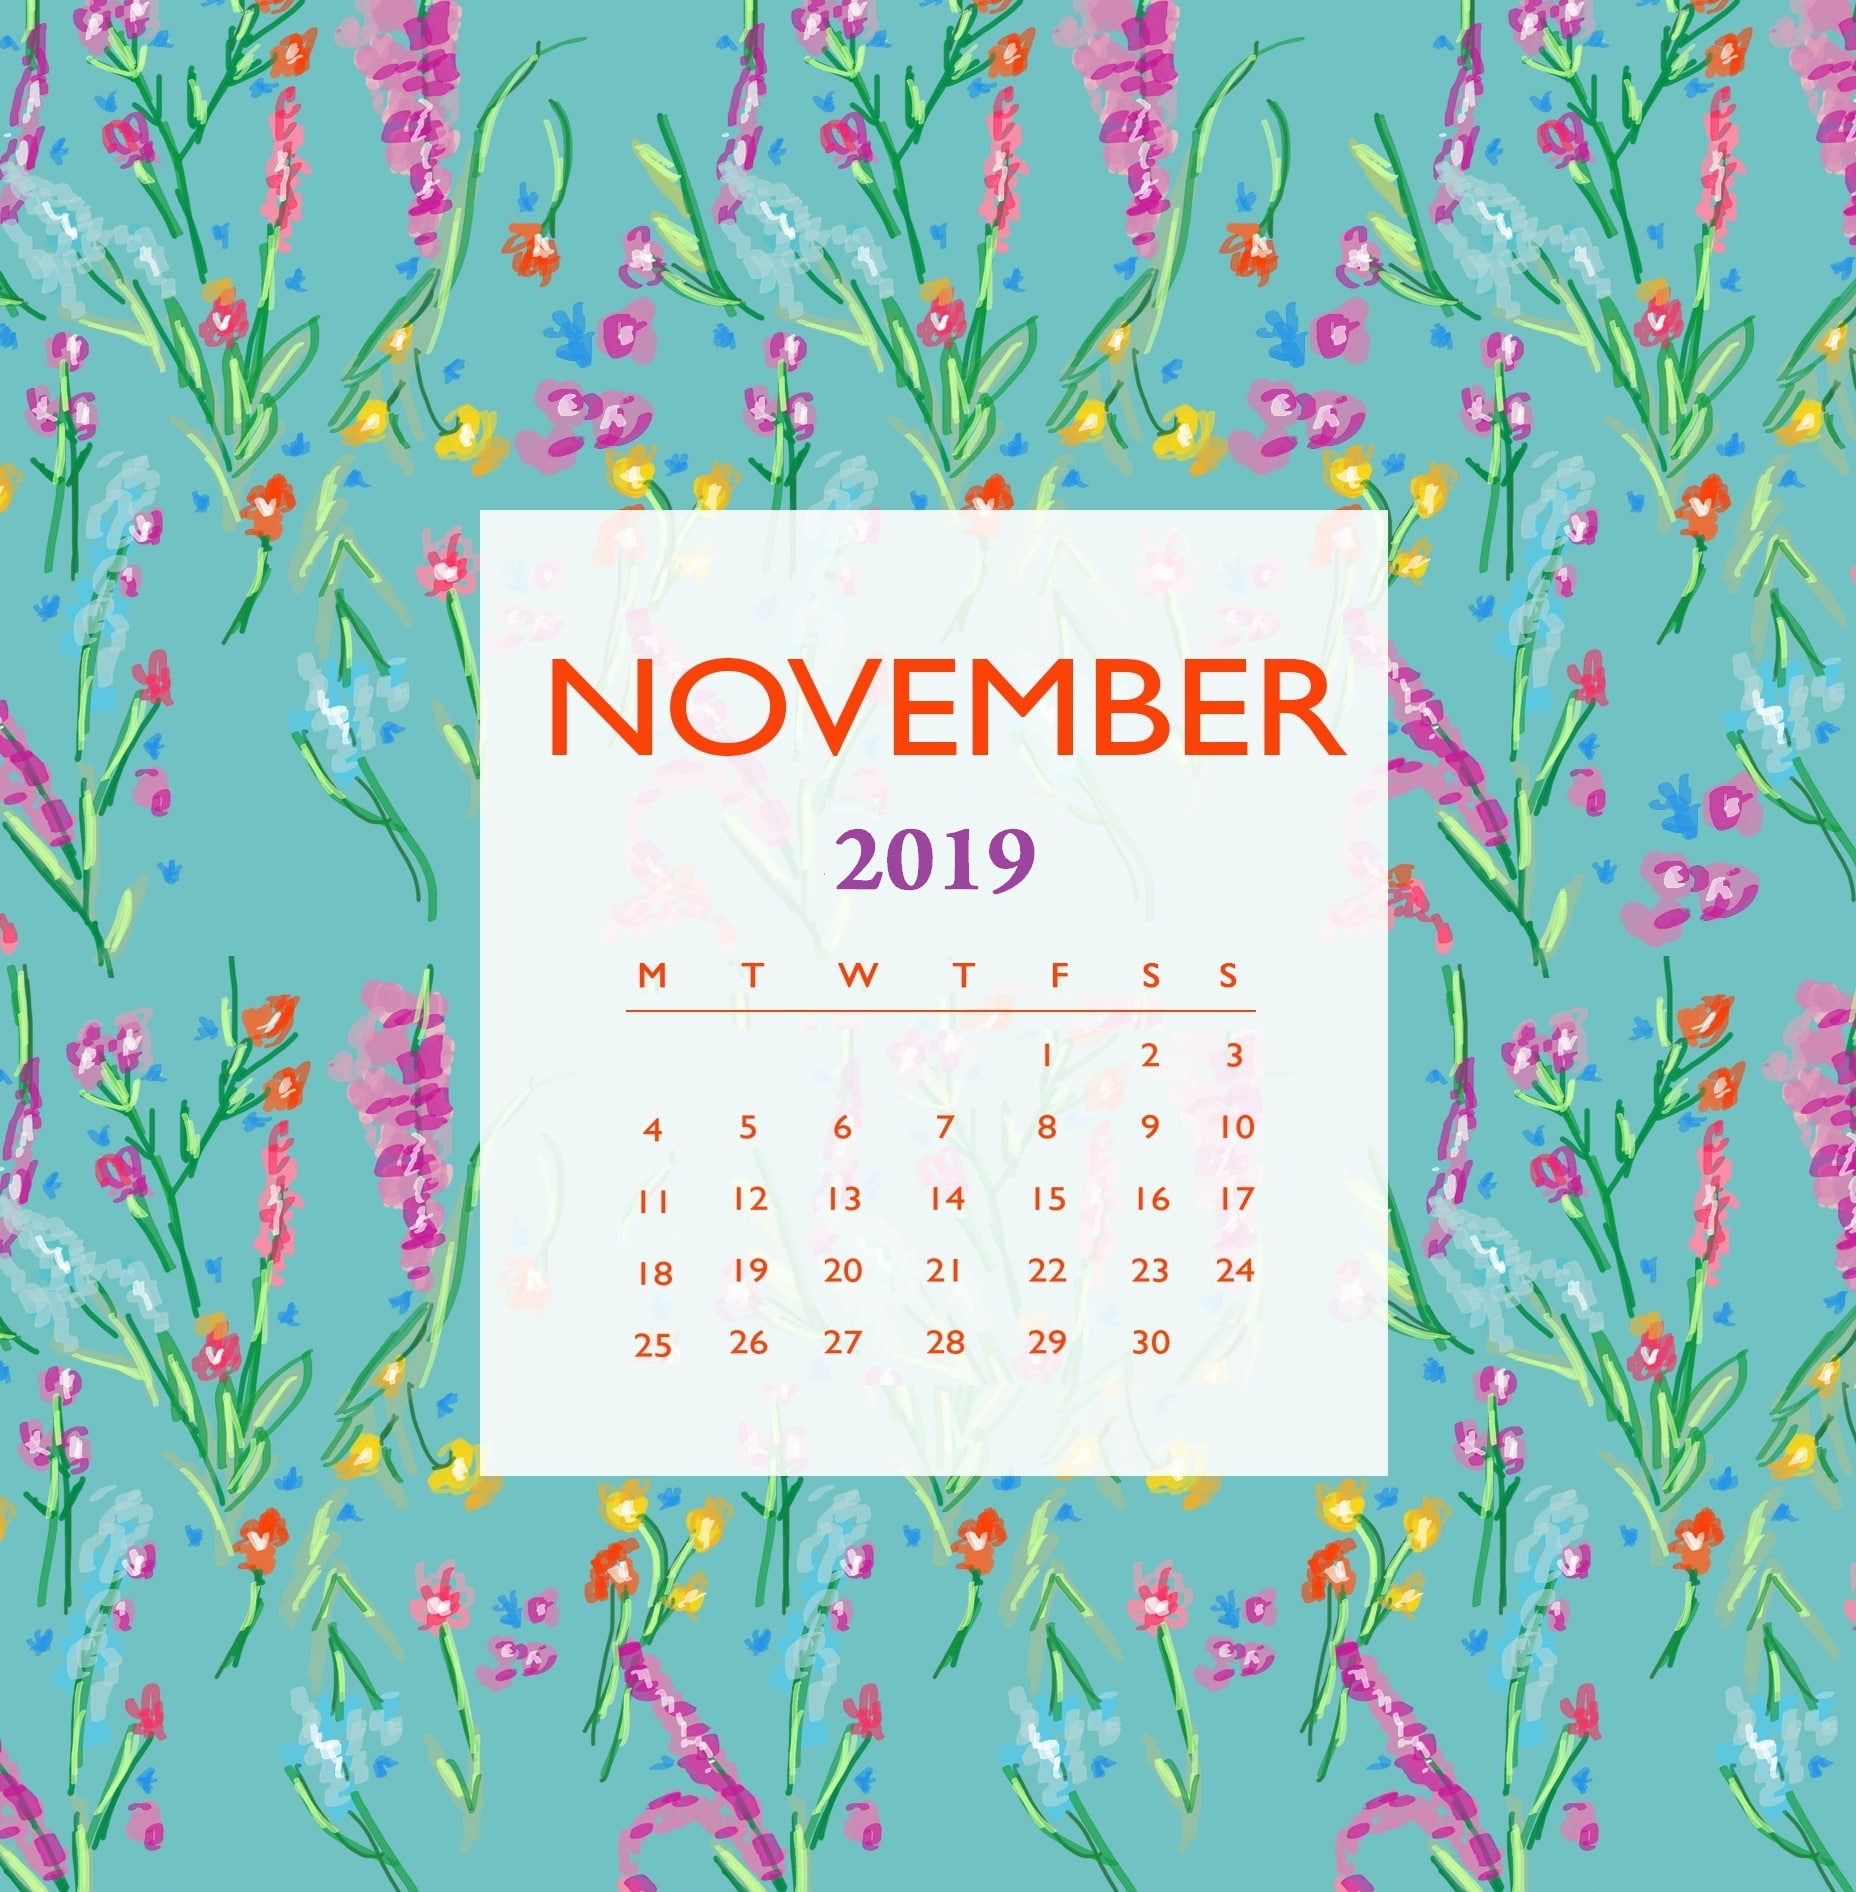 November 2019 Floral Calendar